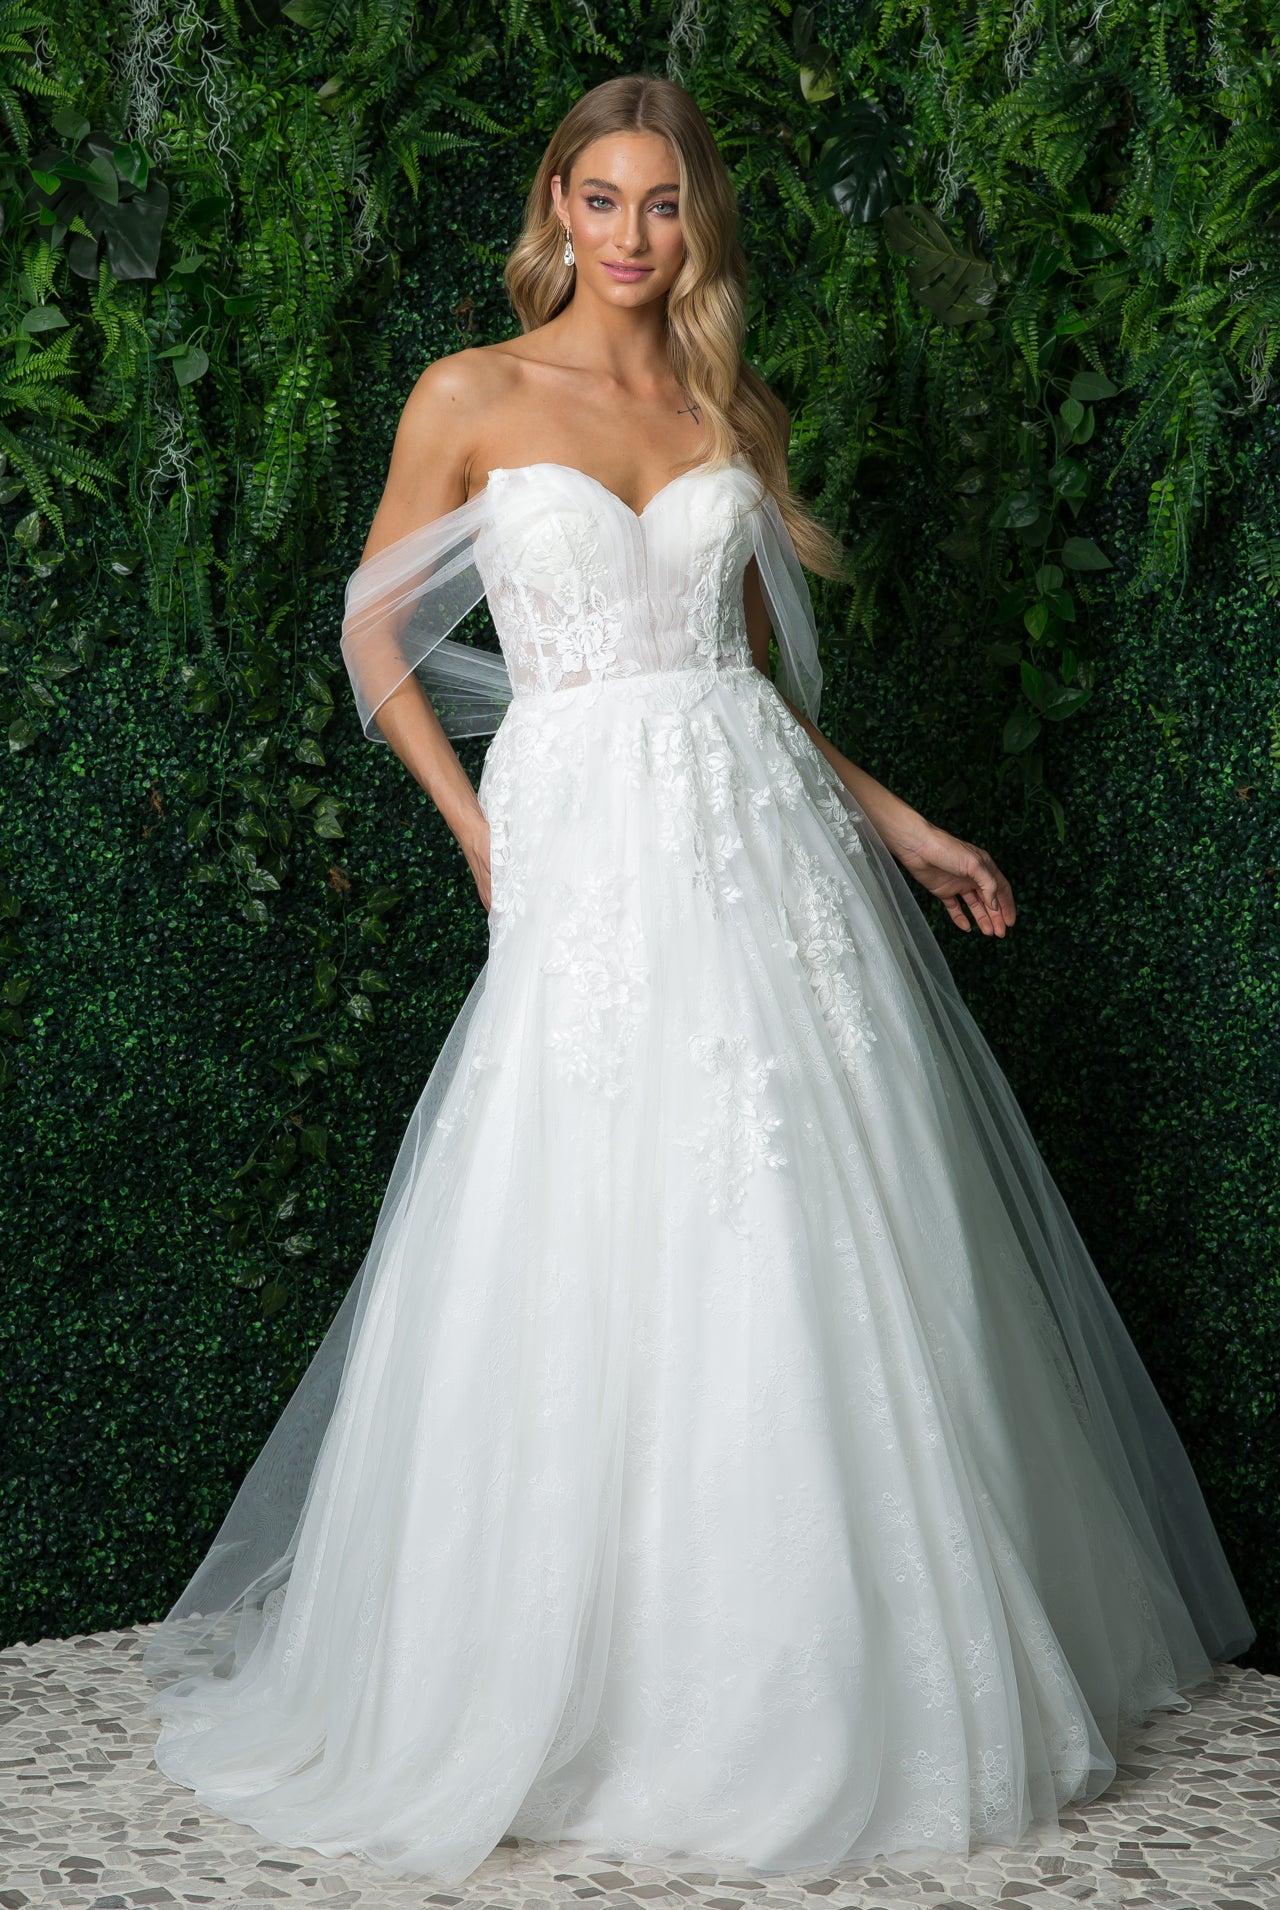 Off Shoulder A-Line Tulle Embroidered Lace Long Wedding Dress NXJE946-Wedding Dress-smcfashion.com